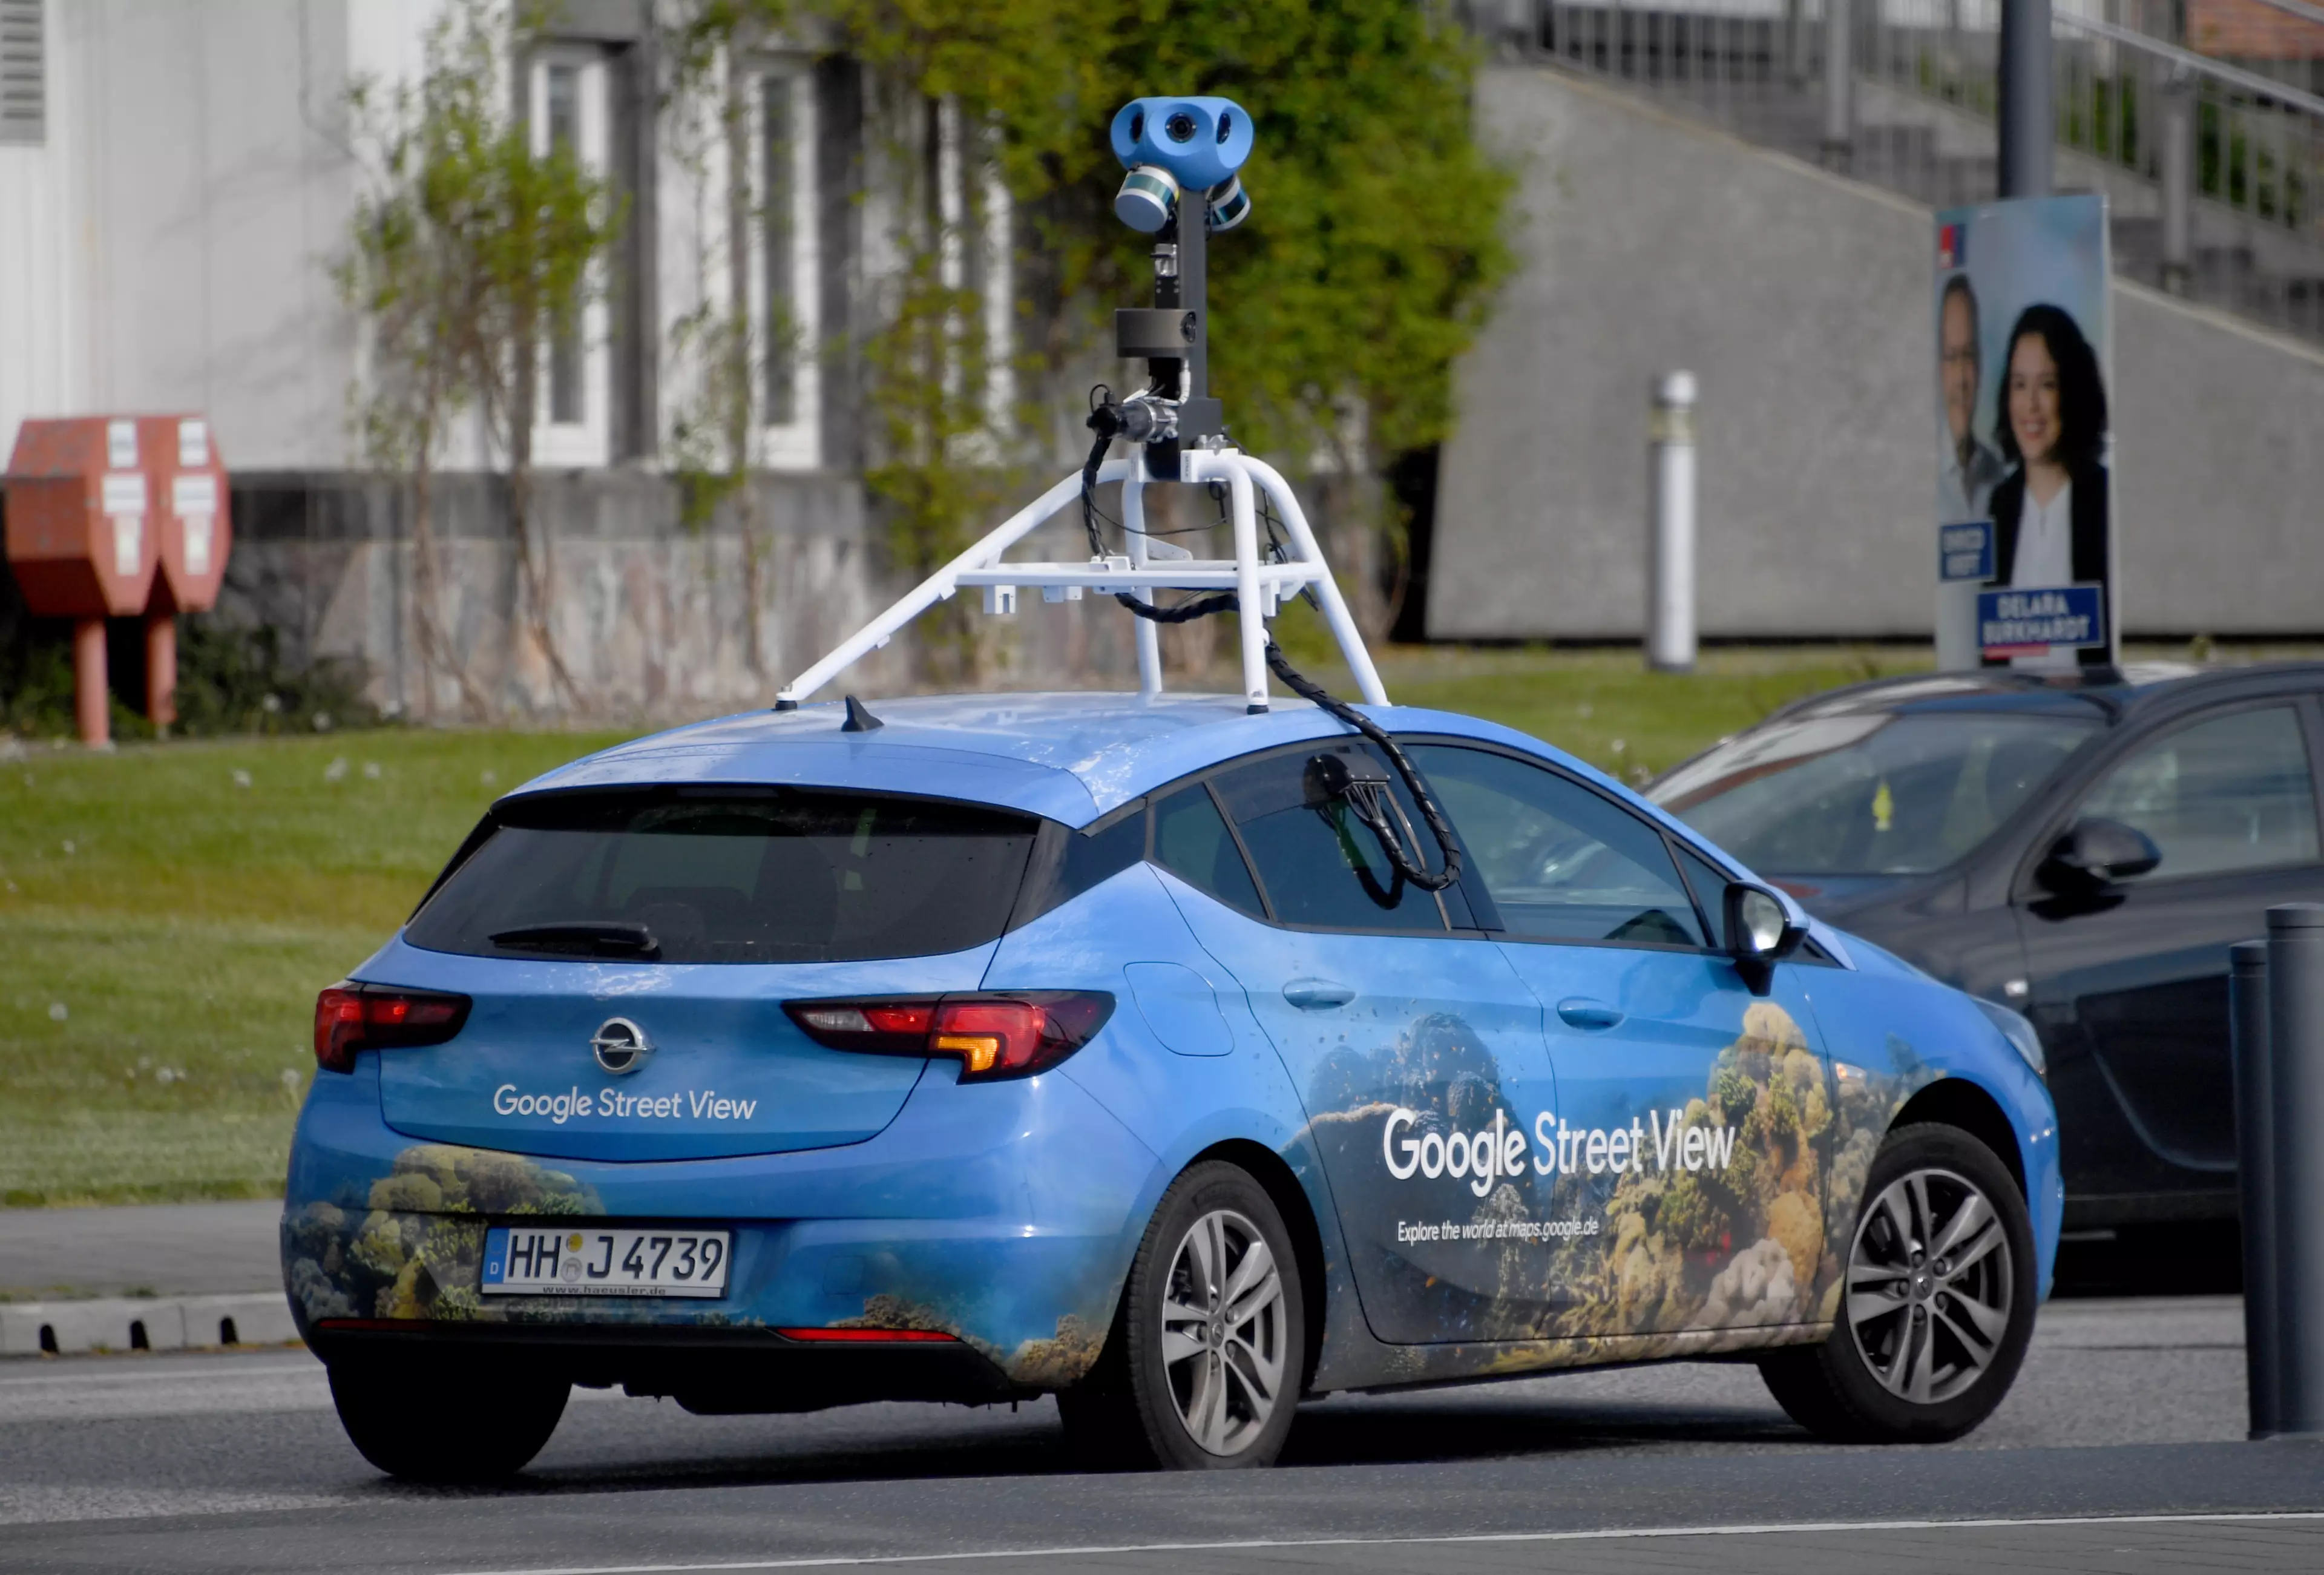 Google Street View car in 2019 (